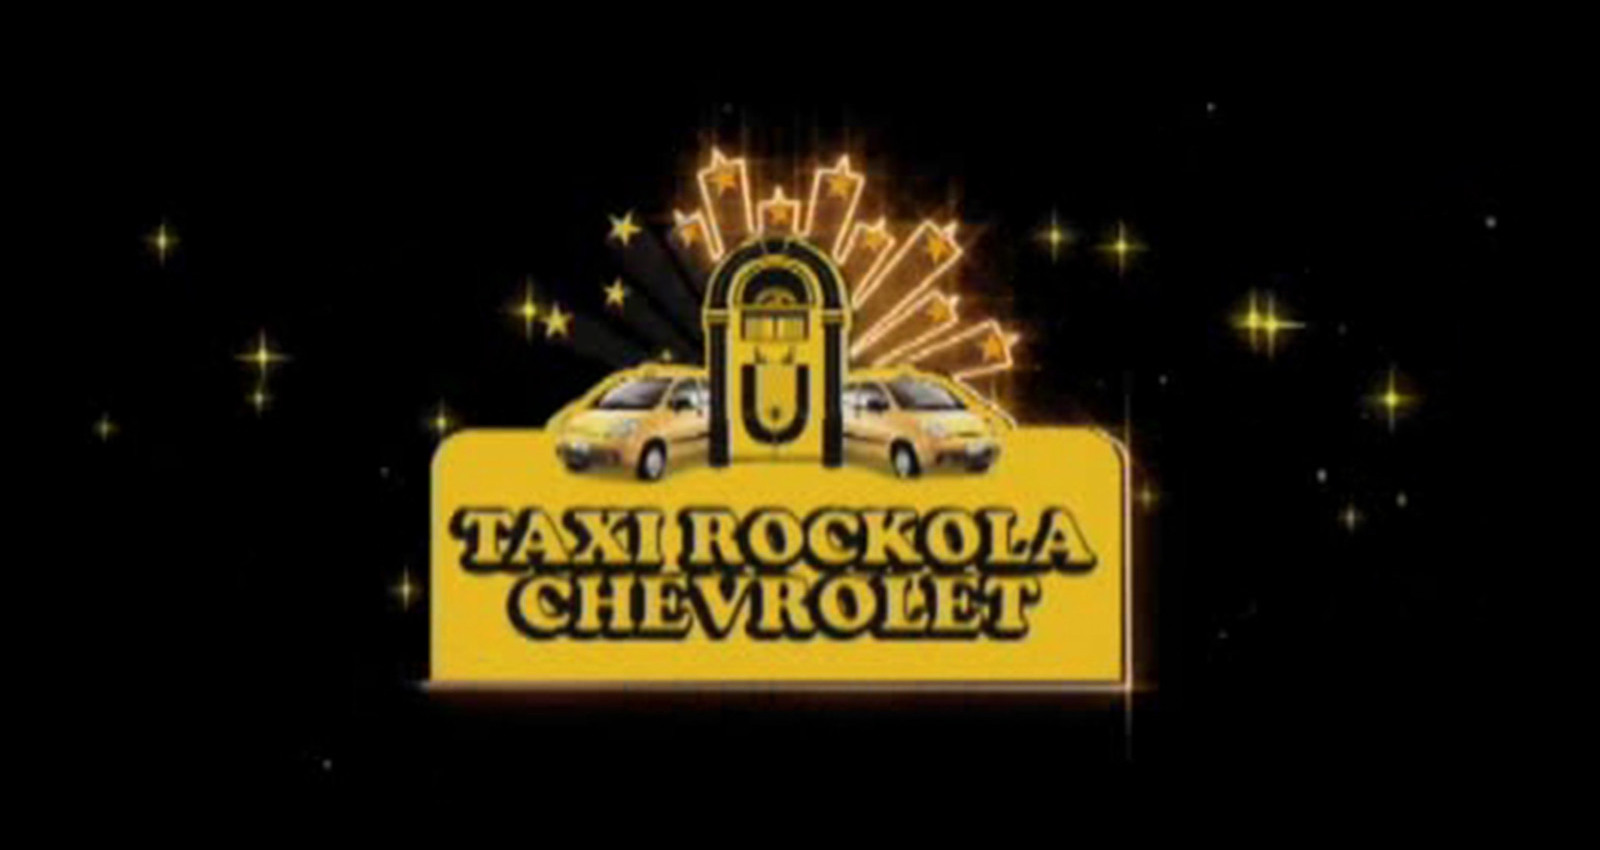 Taxi Rockola